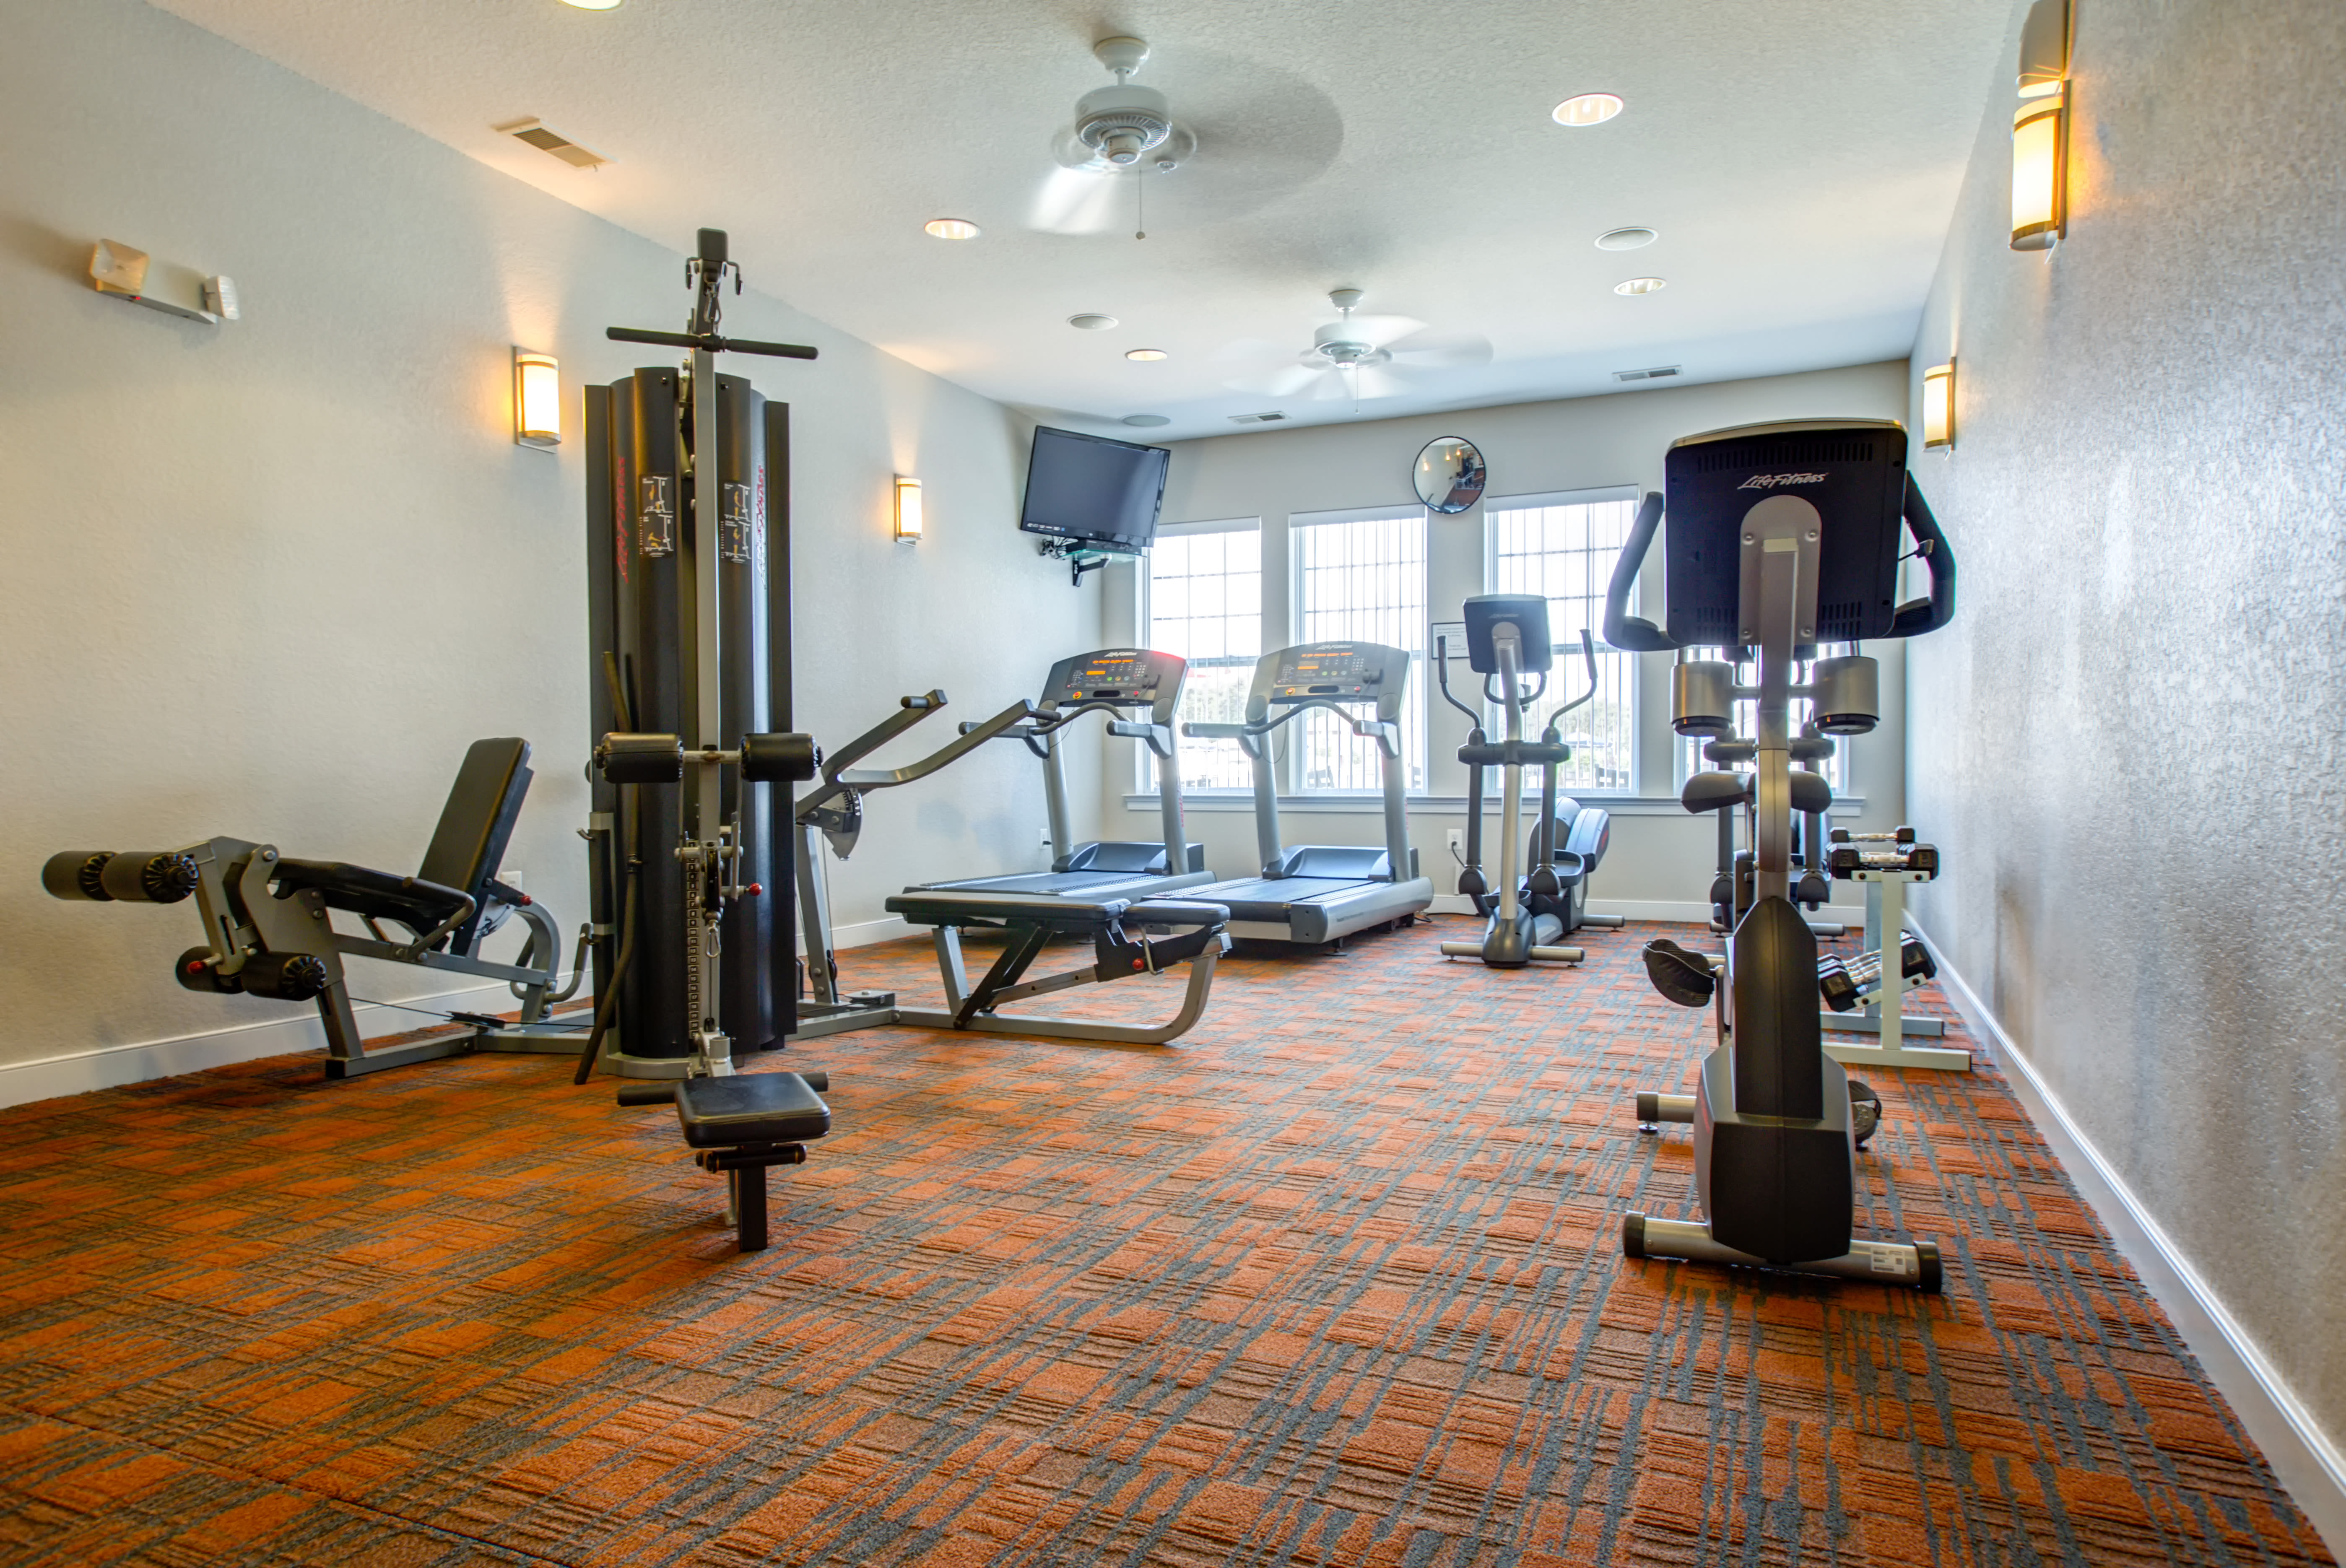 Fitness center at Heroes Manor in Tarawa Terrace, North Carolina